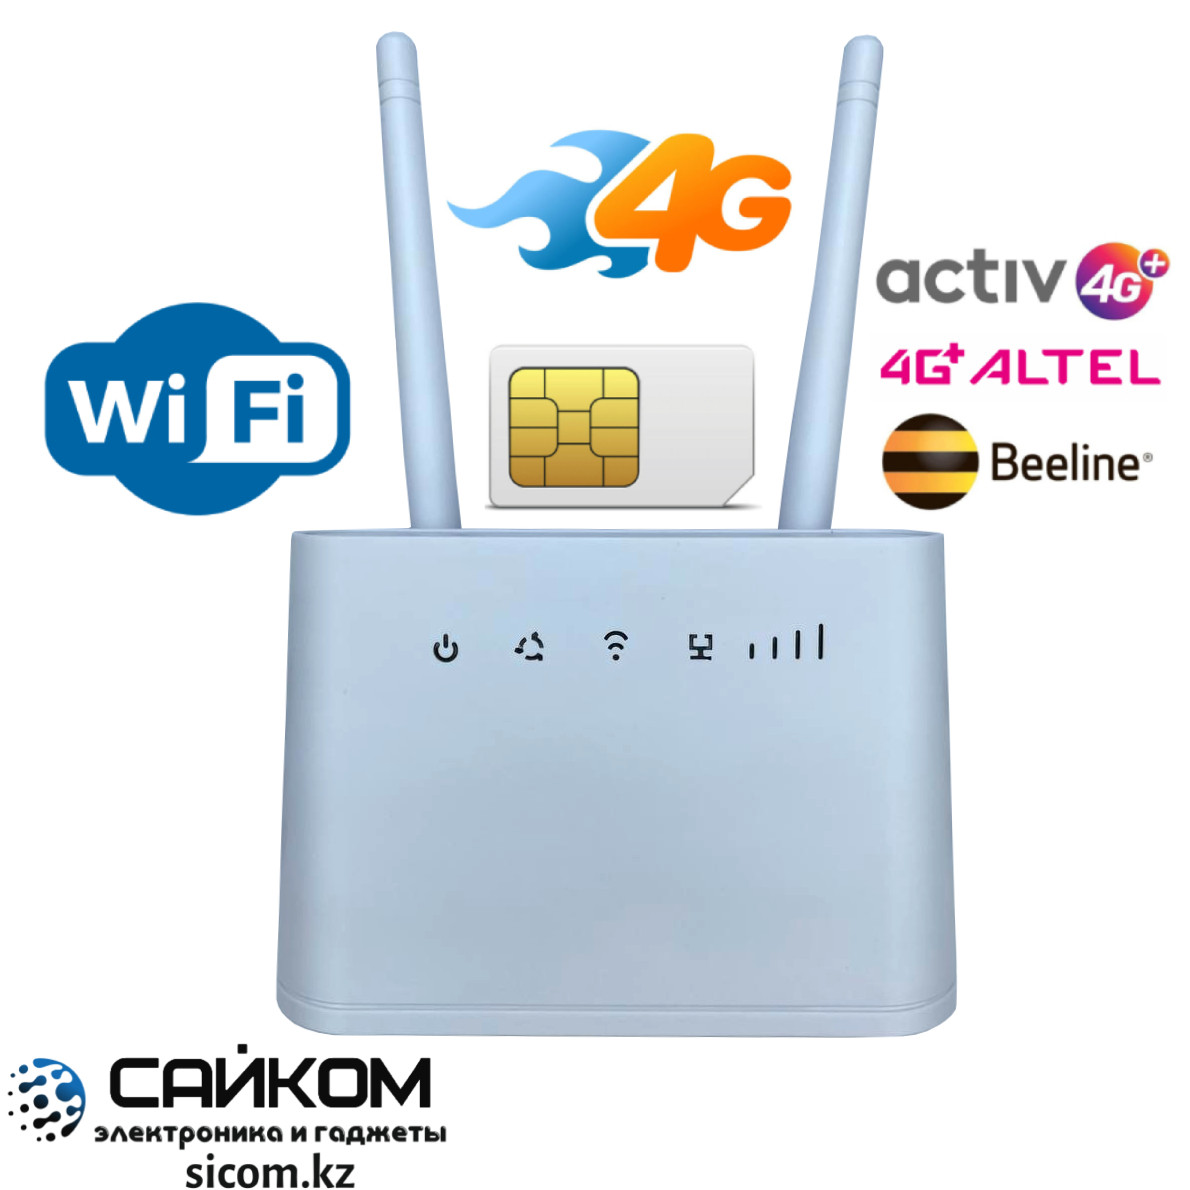 4G LTE Wi-Fi Wireless Роутер EIUC2K, Работает от SIM карты